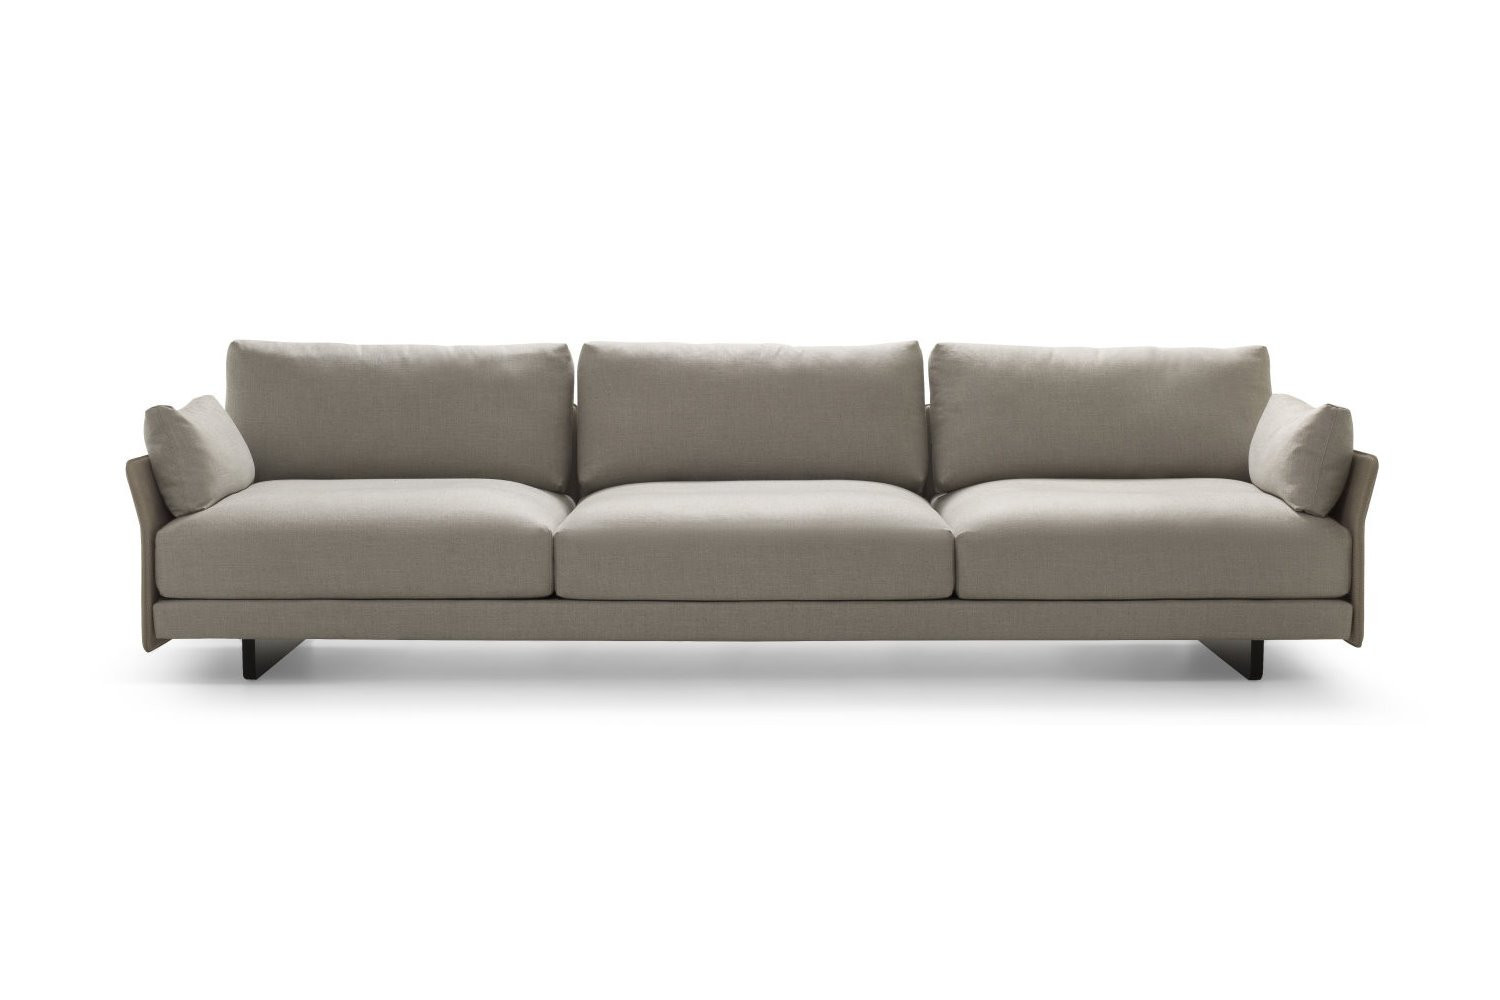 Space-saving sectional sofa with narrow armrests Murphy